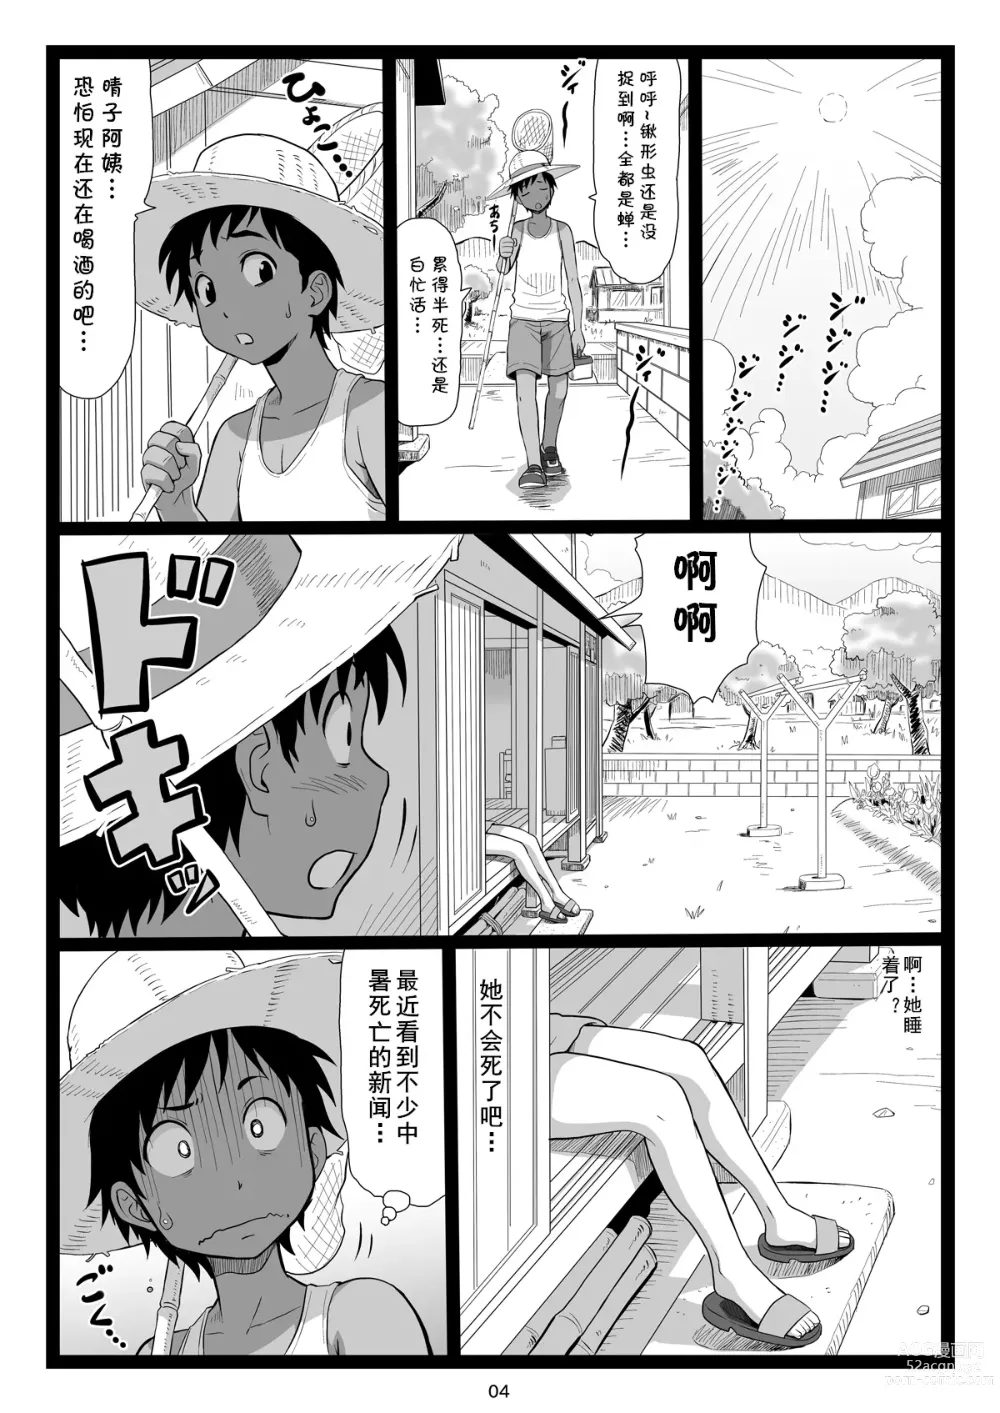 Page 4 of doujinshi Natsuyasumi no Omoide Joukan